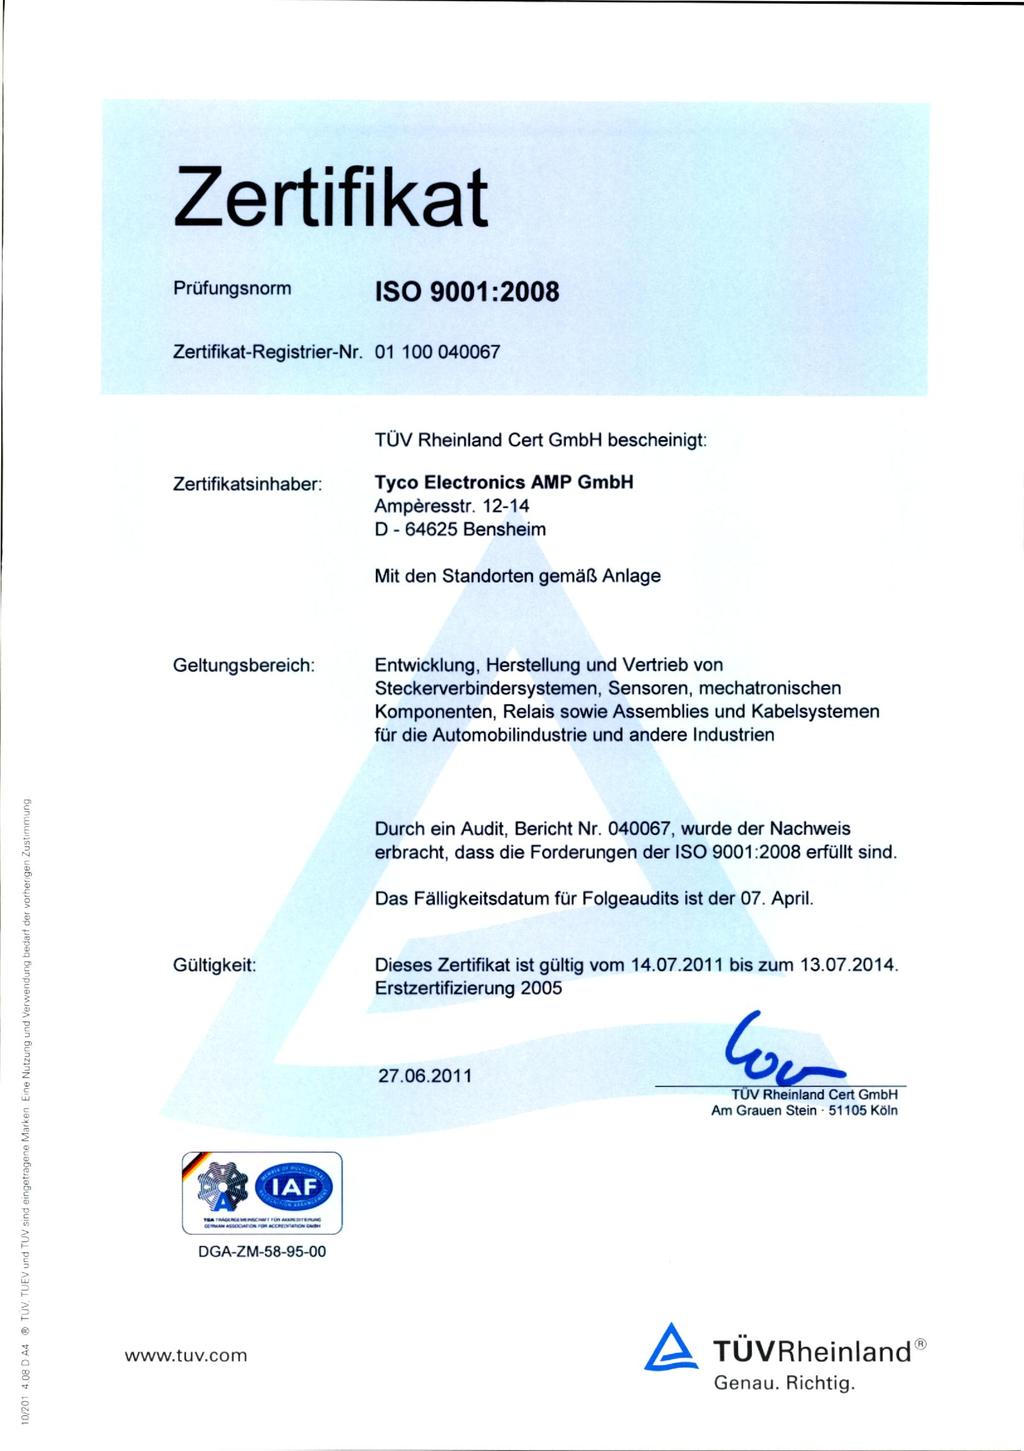 1 Zertifikat Prüfungsnorm Zertifikat-Registrier-Nr. 01 100 040067 n bescheinigt: Zertifikatsinhaber: Tyco Electronics AMP GmbH Amperesstr.